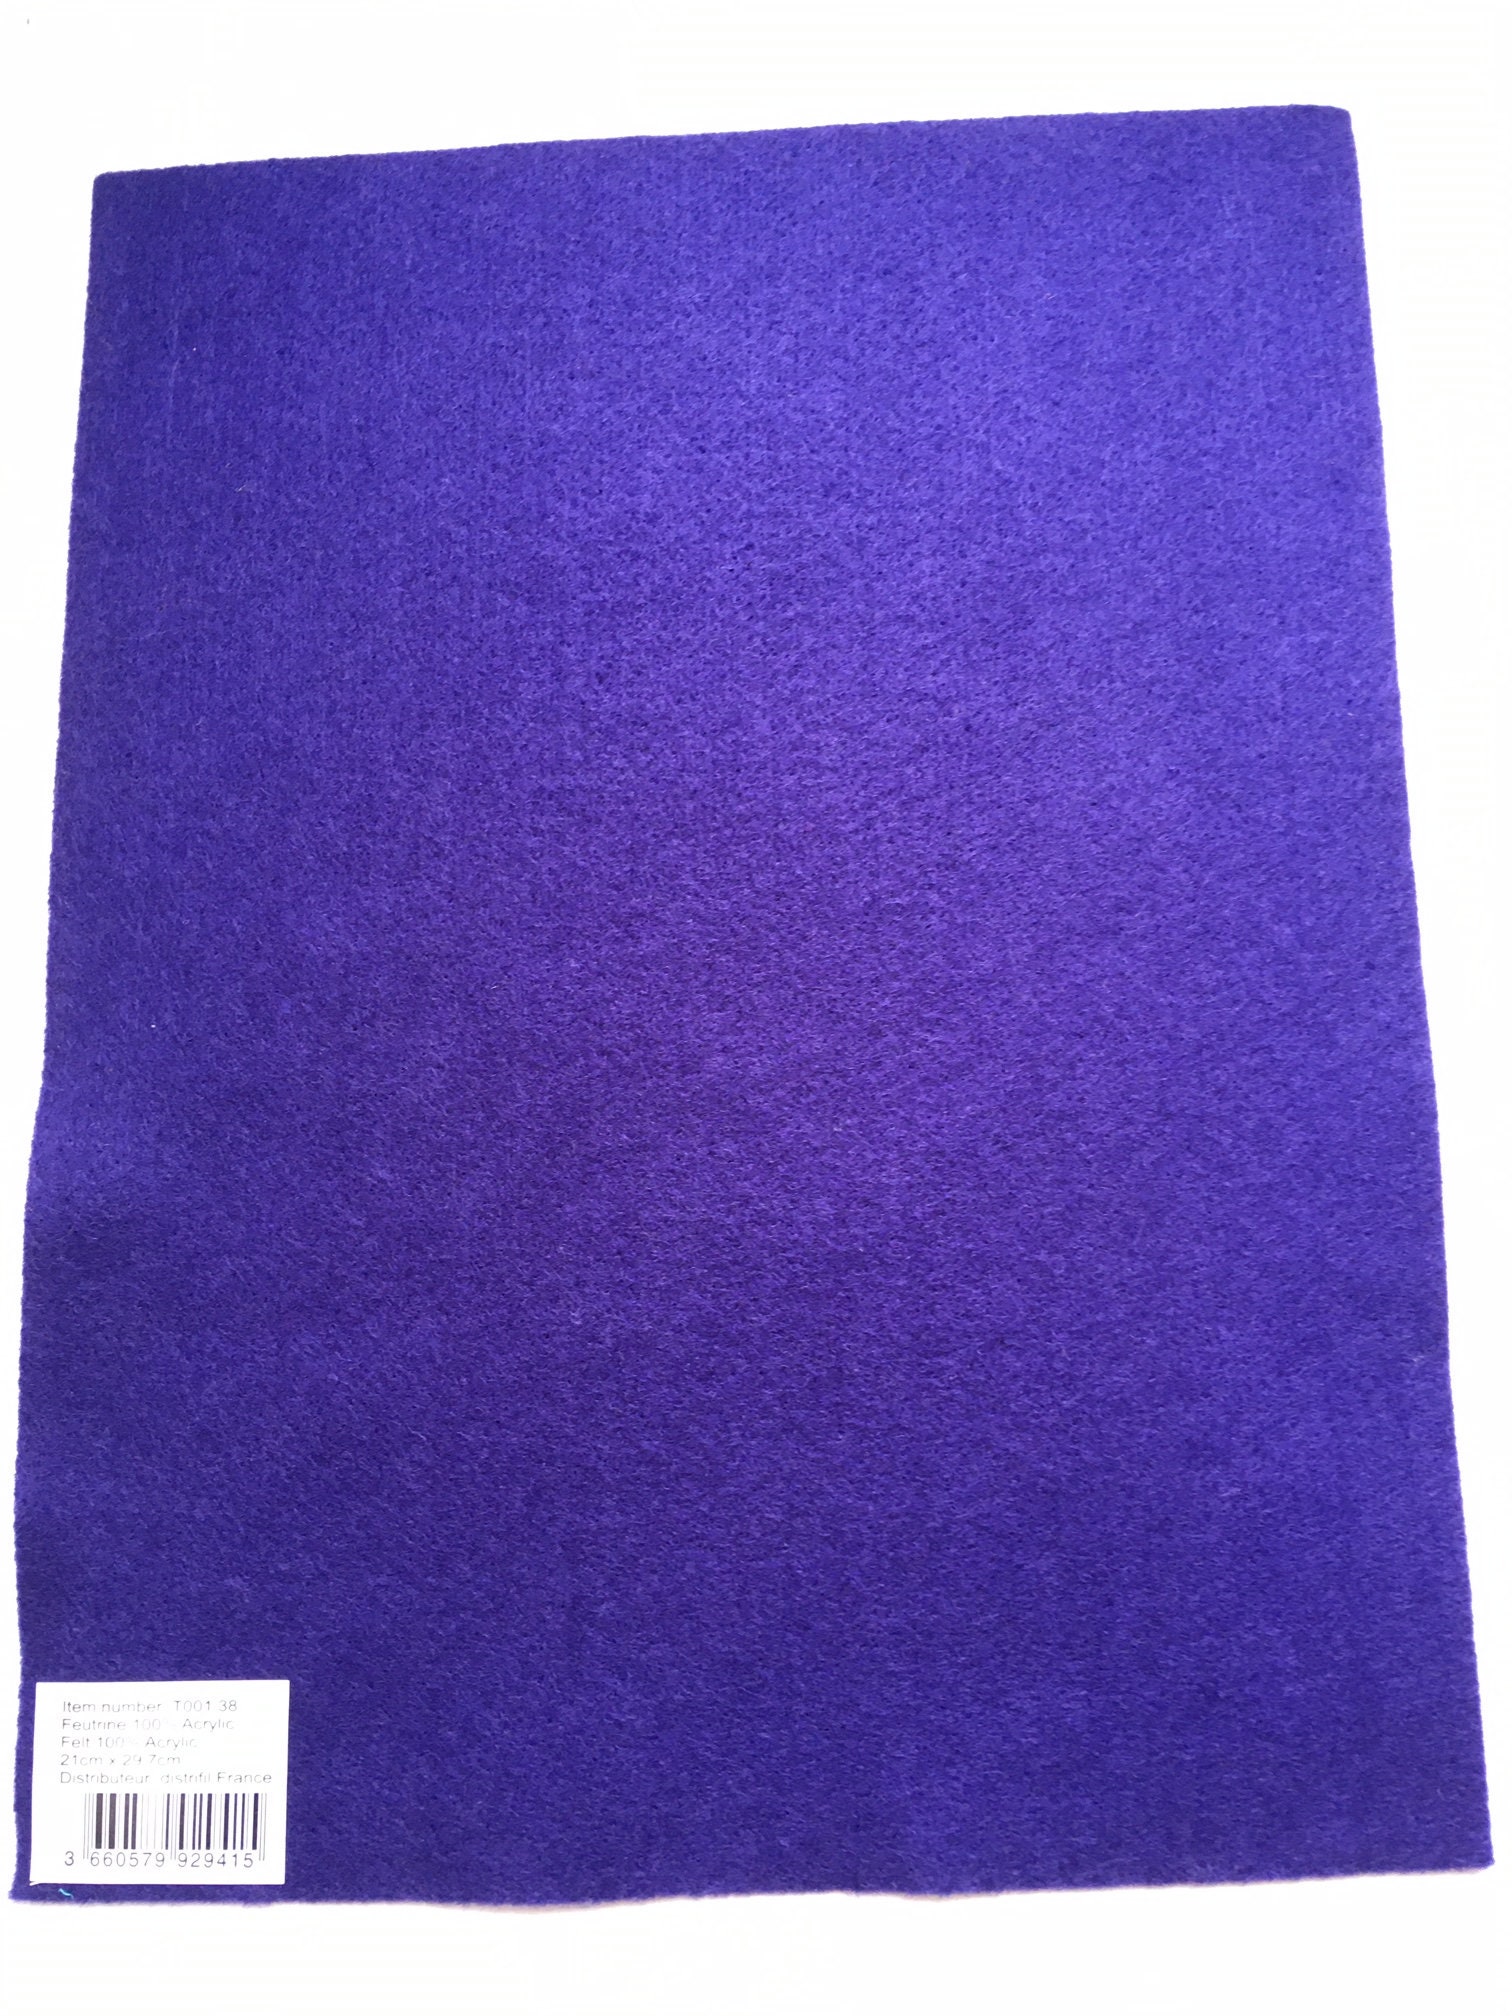 Polyester fabric, imitation alcantara or suede, blue color, (MT100)